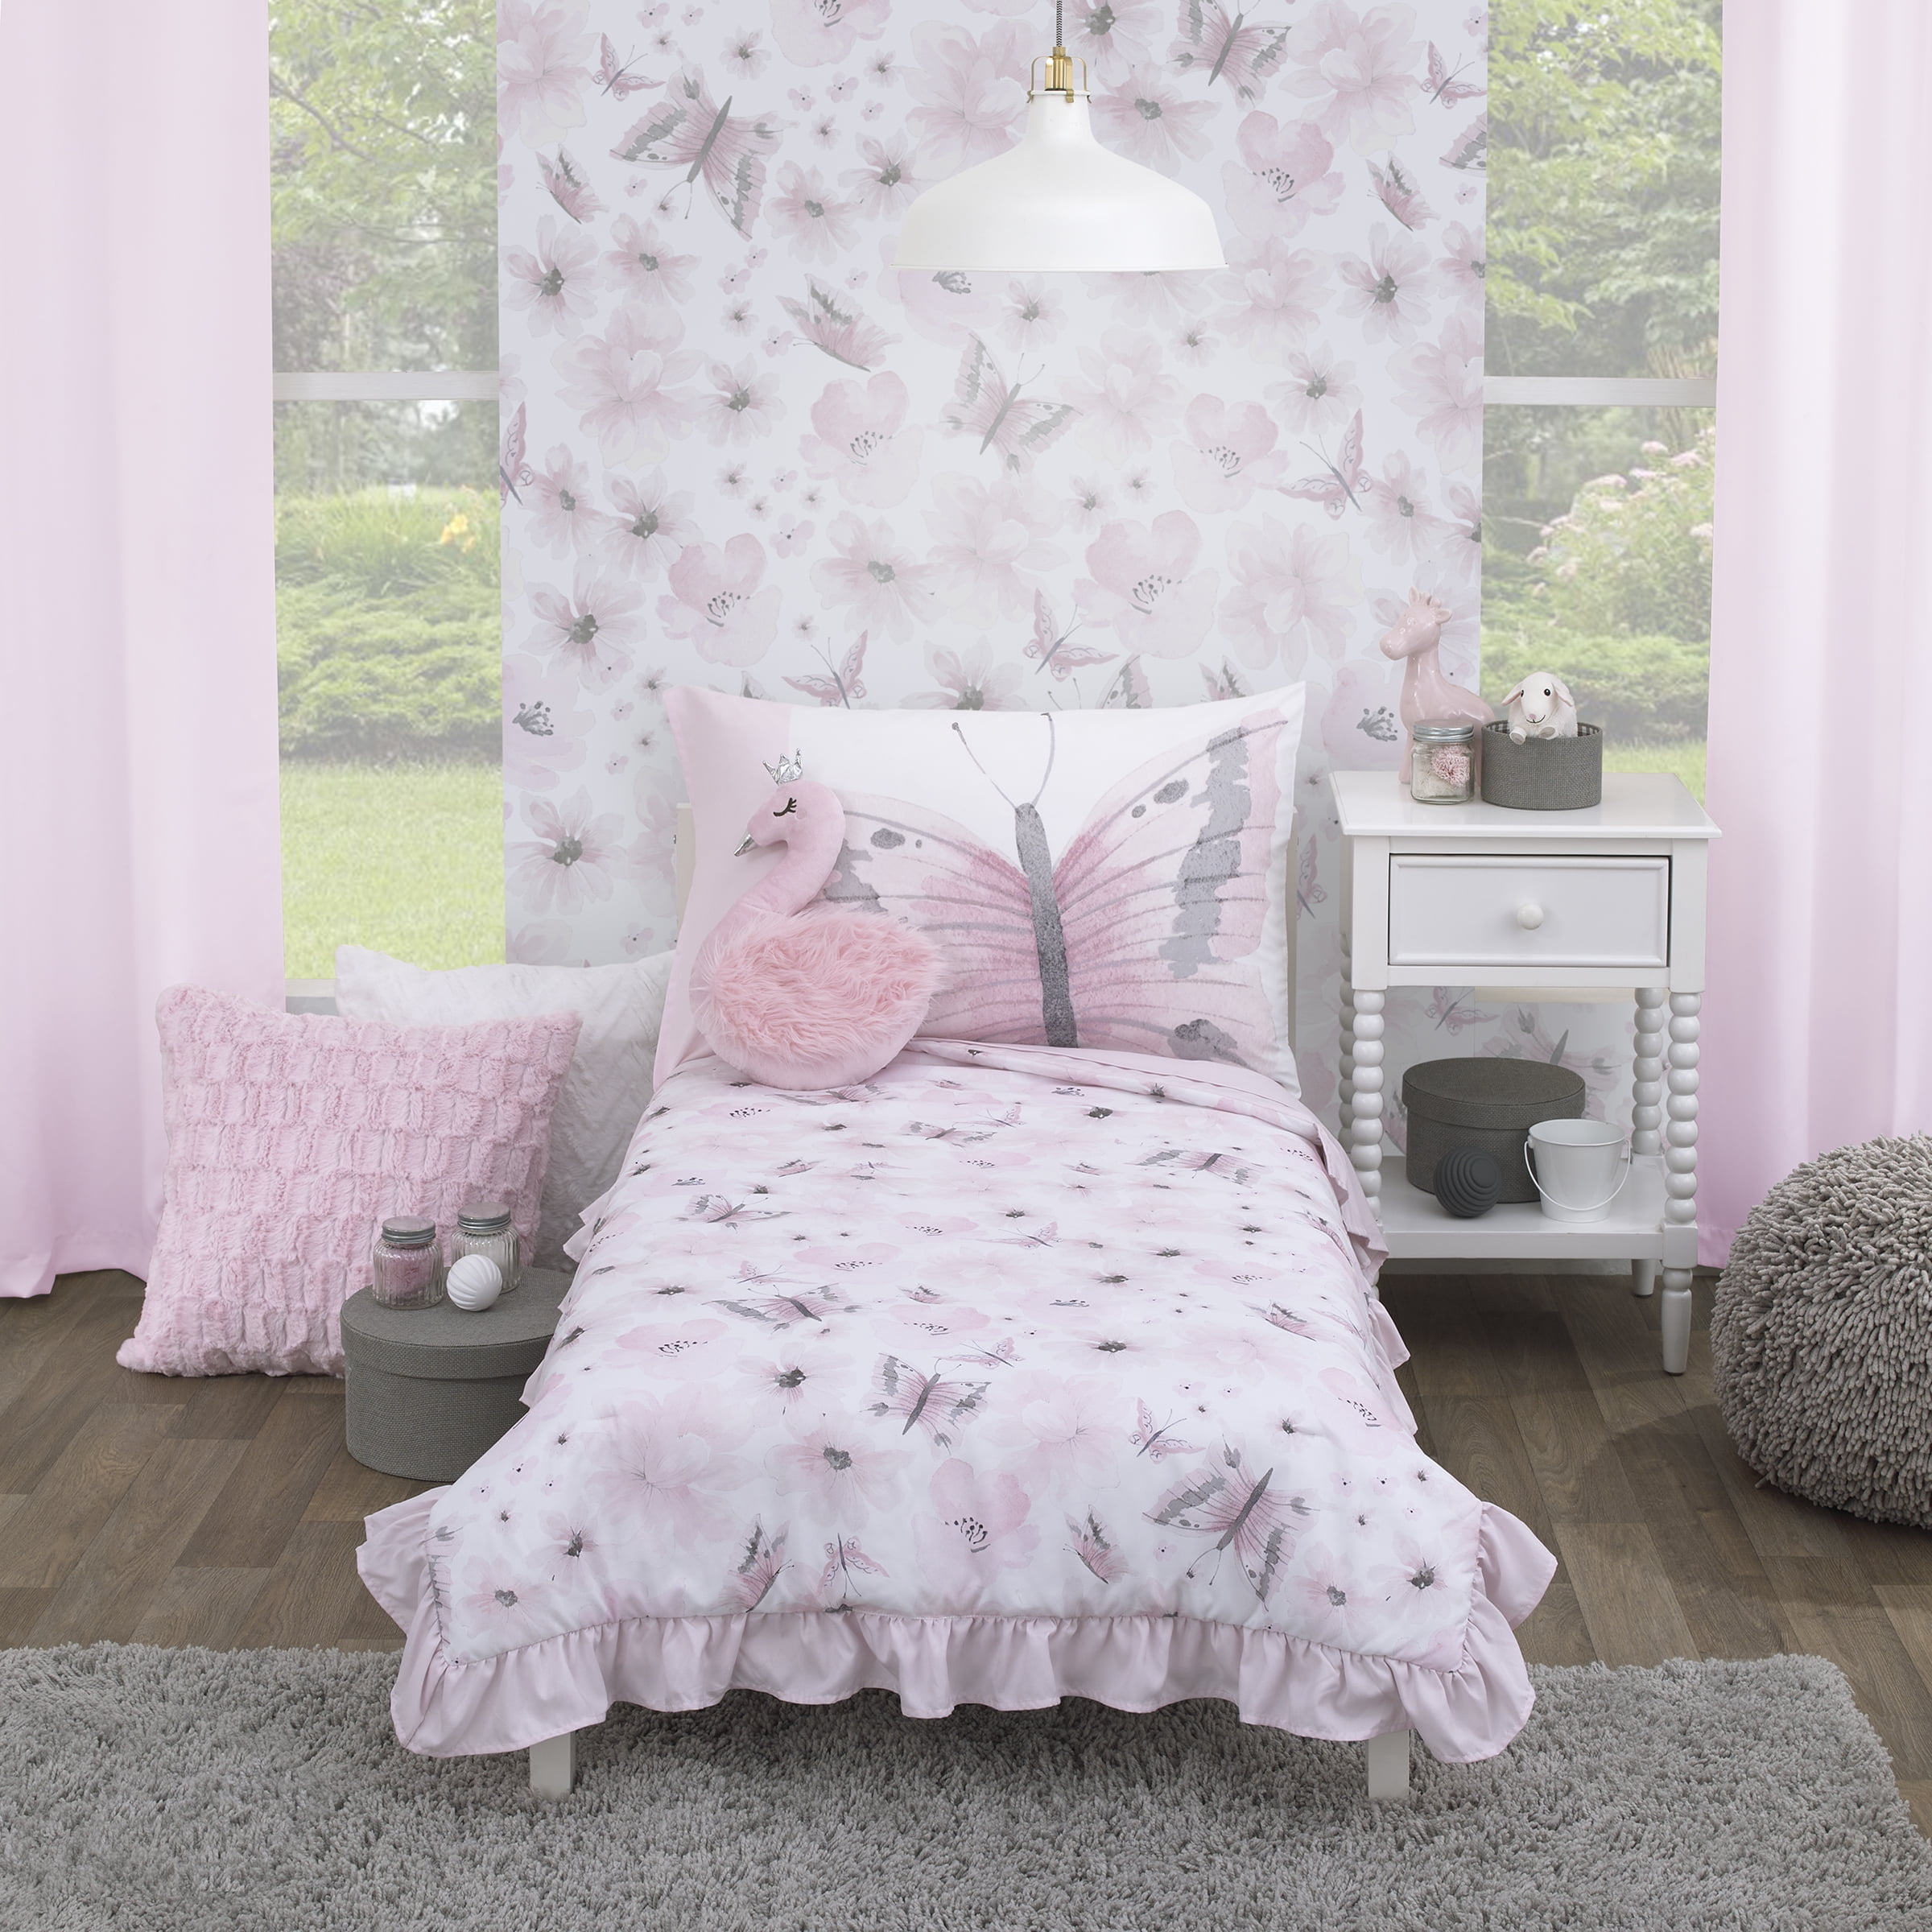 5Pc Toddler Bedding set Flat Fitted Sheet Comforter Pillowcase Dust Ruffle Skirt 